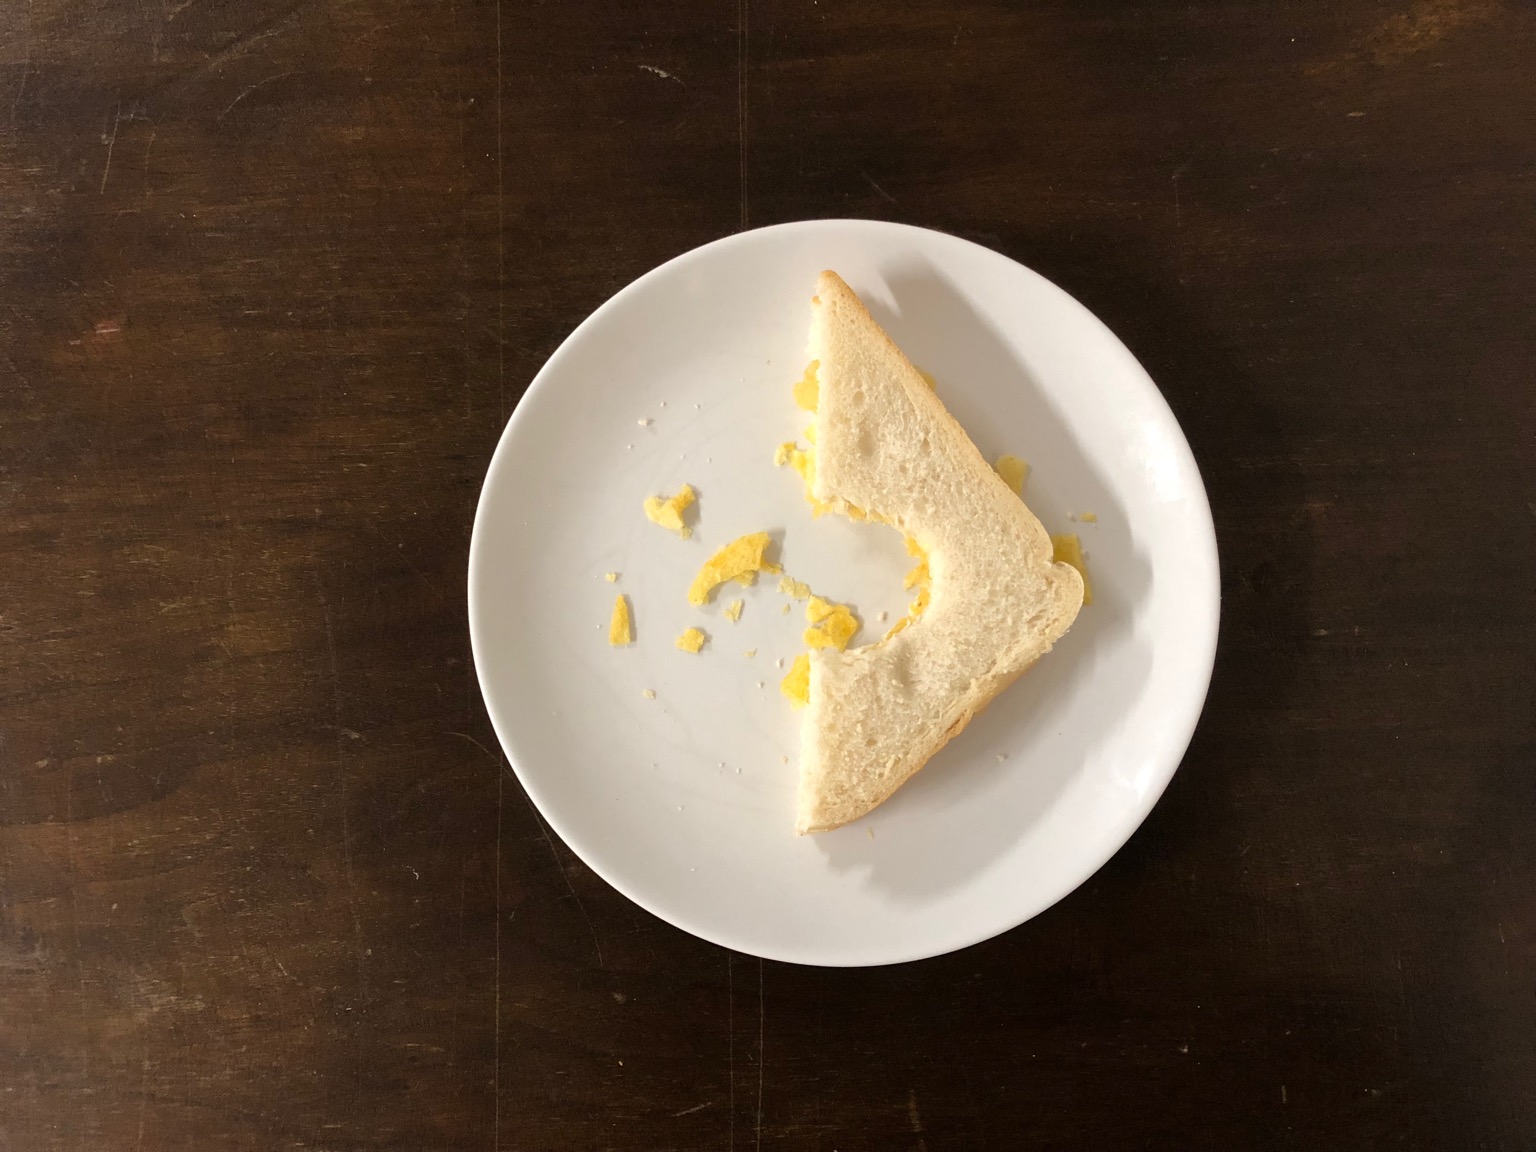 White crisp sandwich with a bite taken out